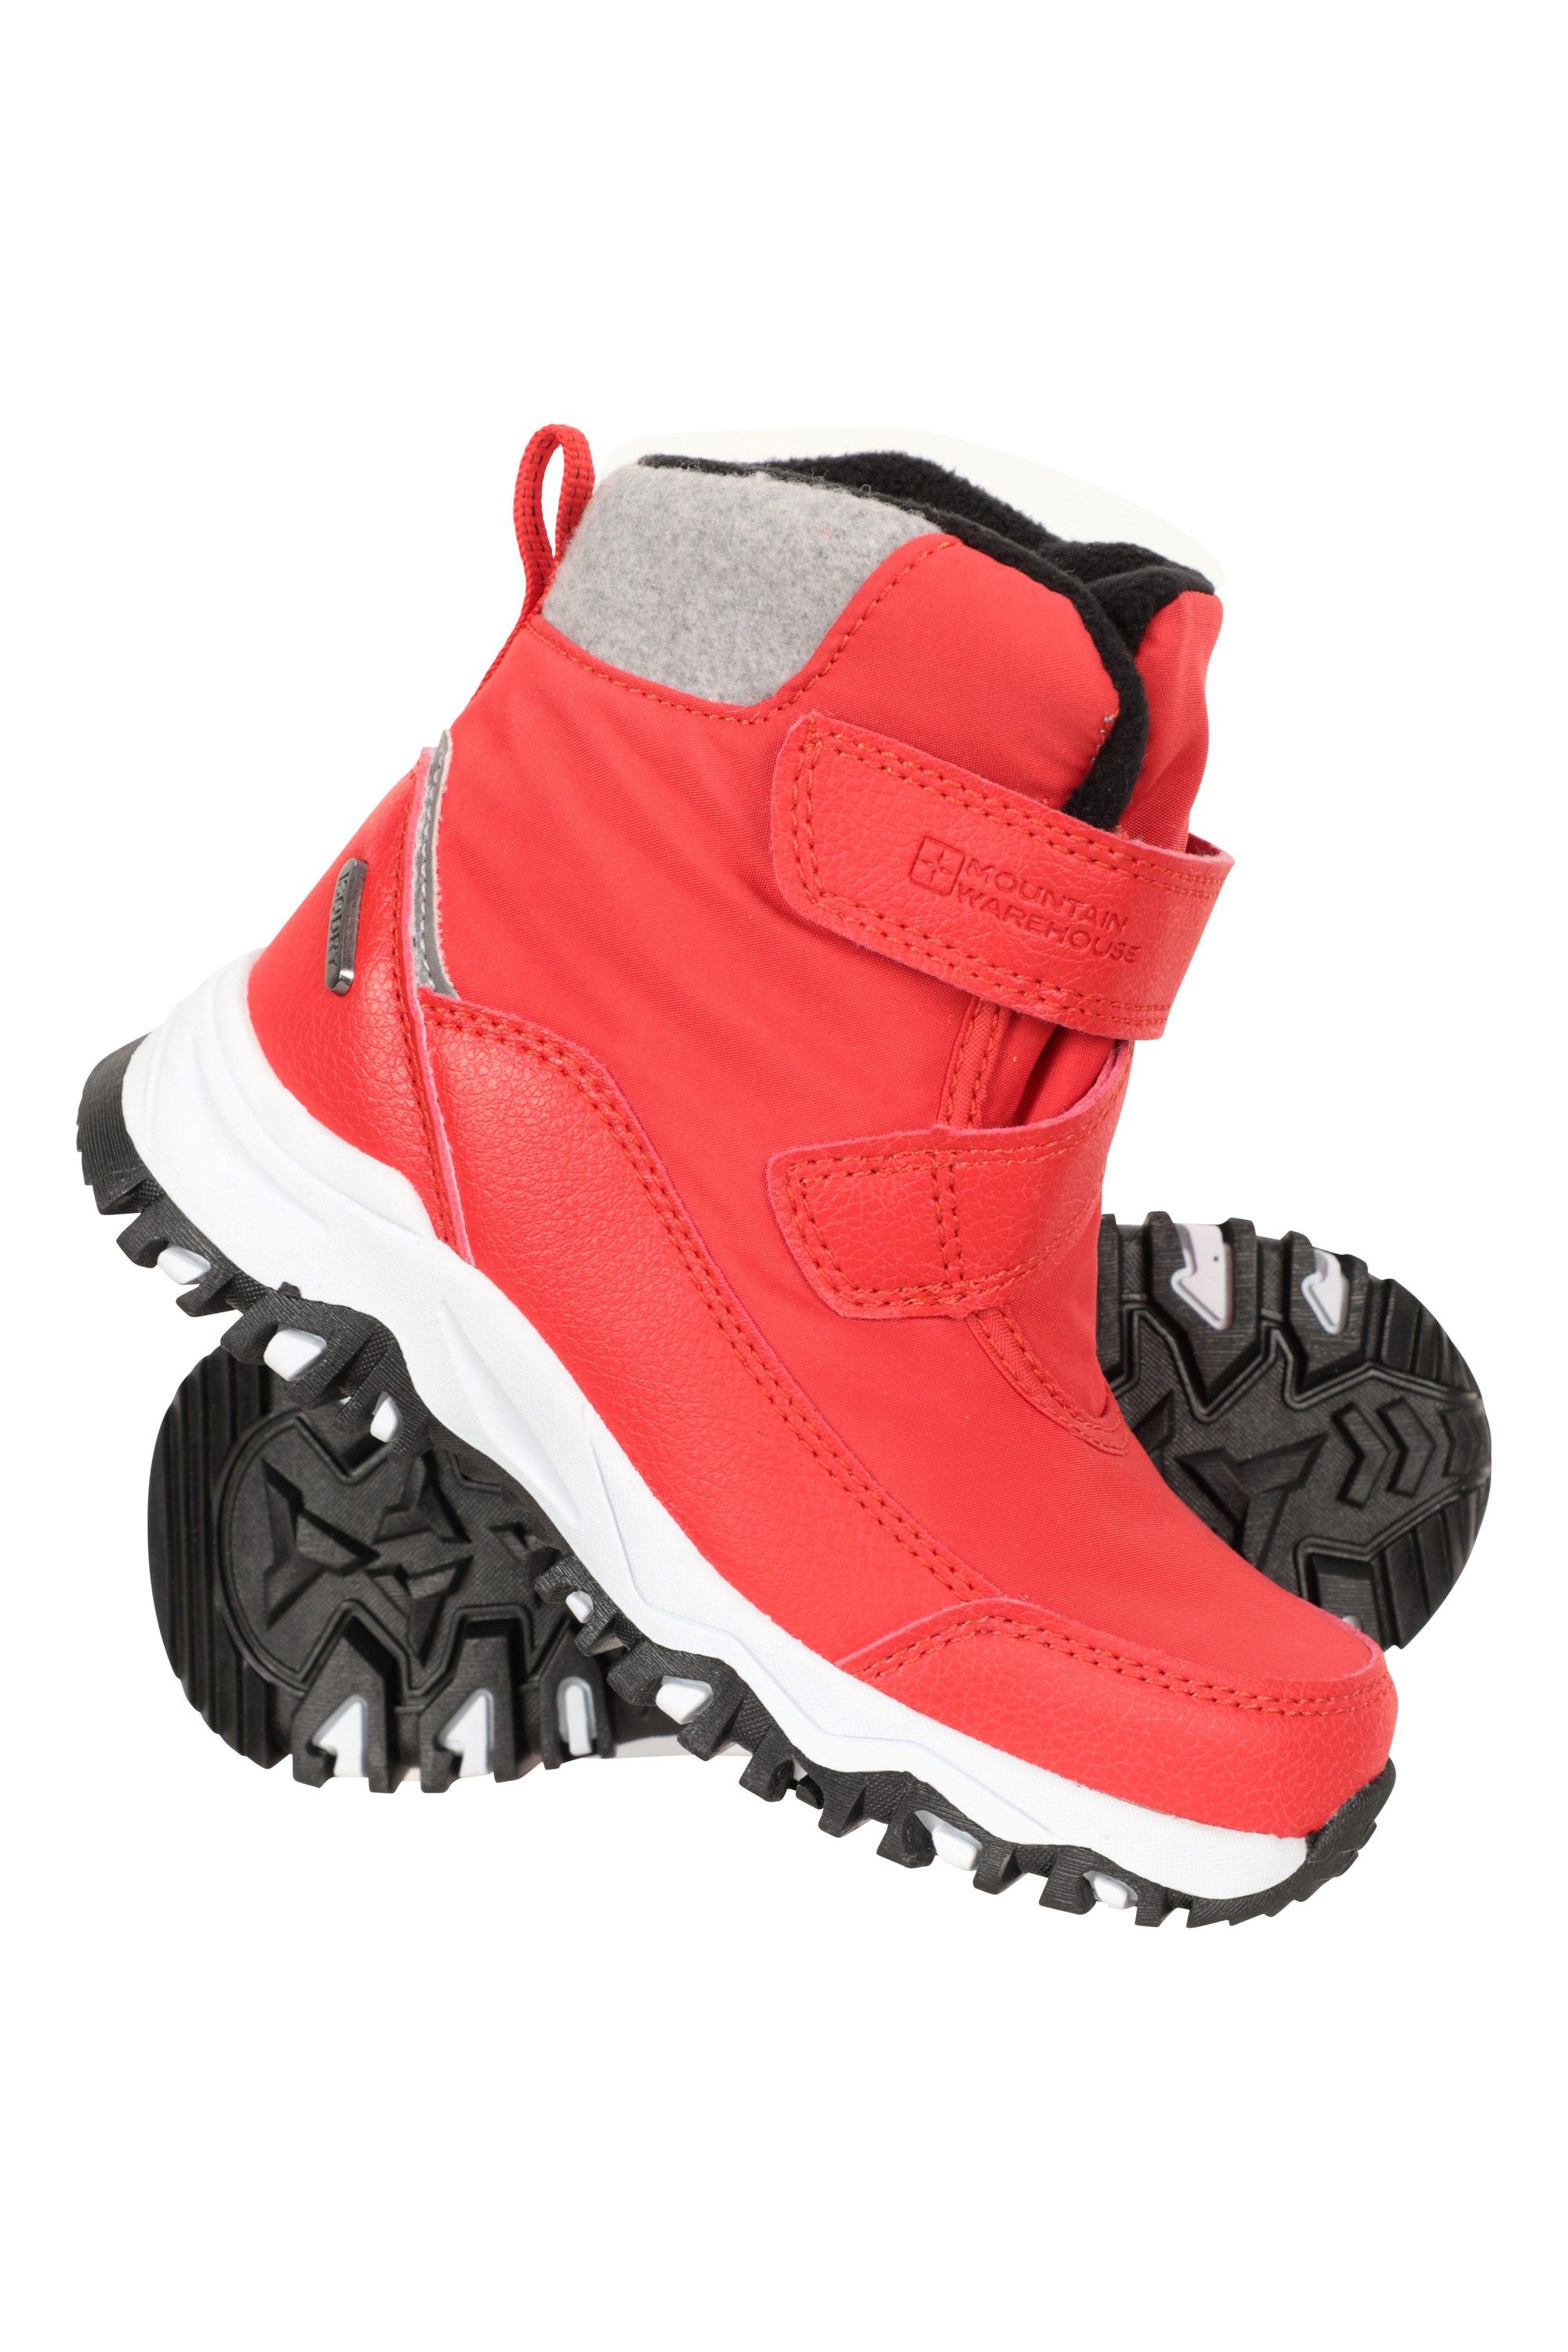 RRP £49 Size UK 10 / EU 28 Purple Mountain Warehouse Alpine Kids Waterproof Snow Boots 